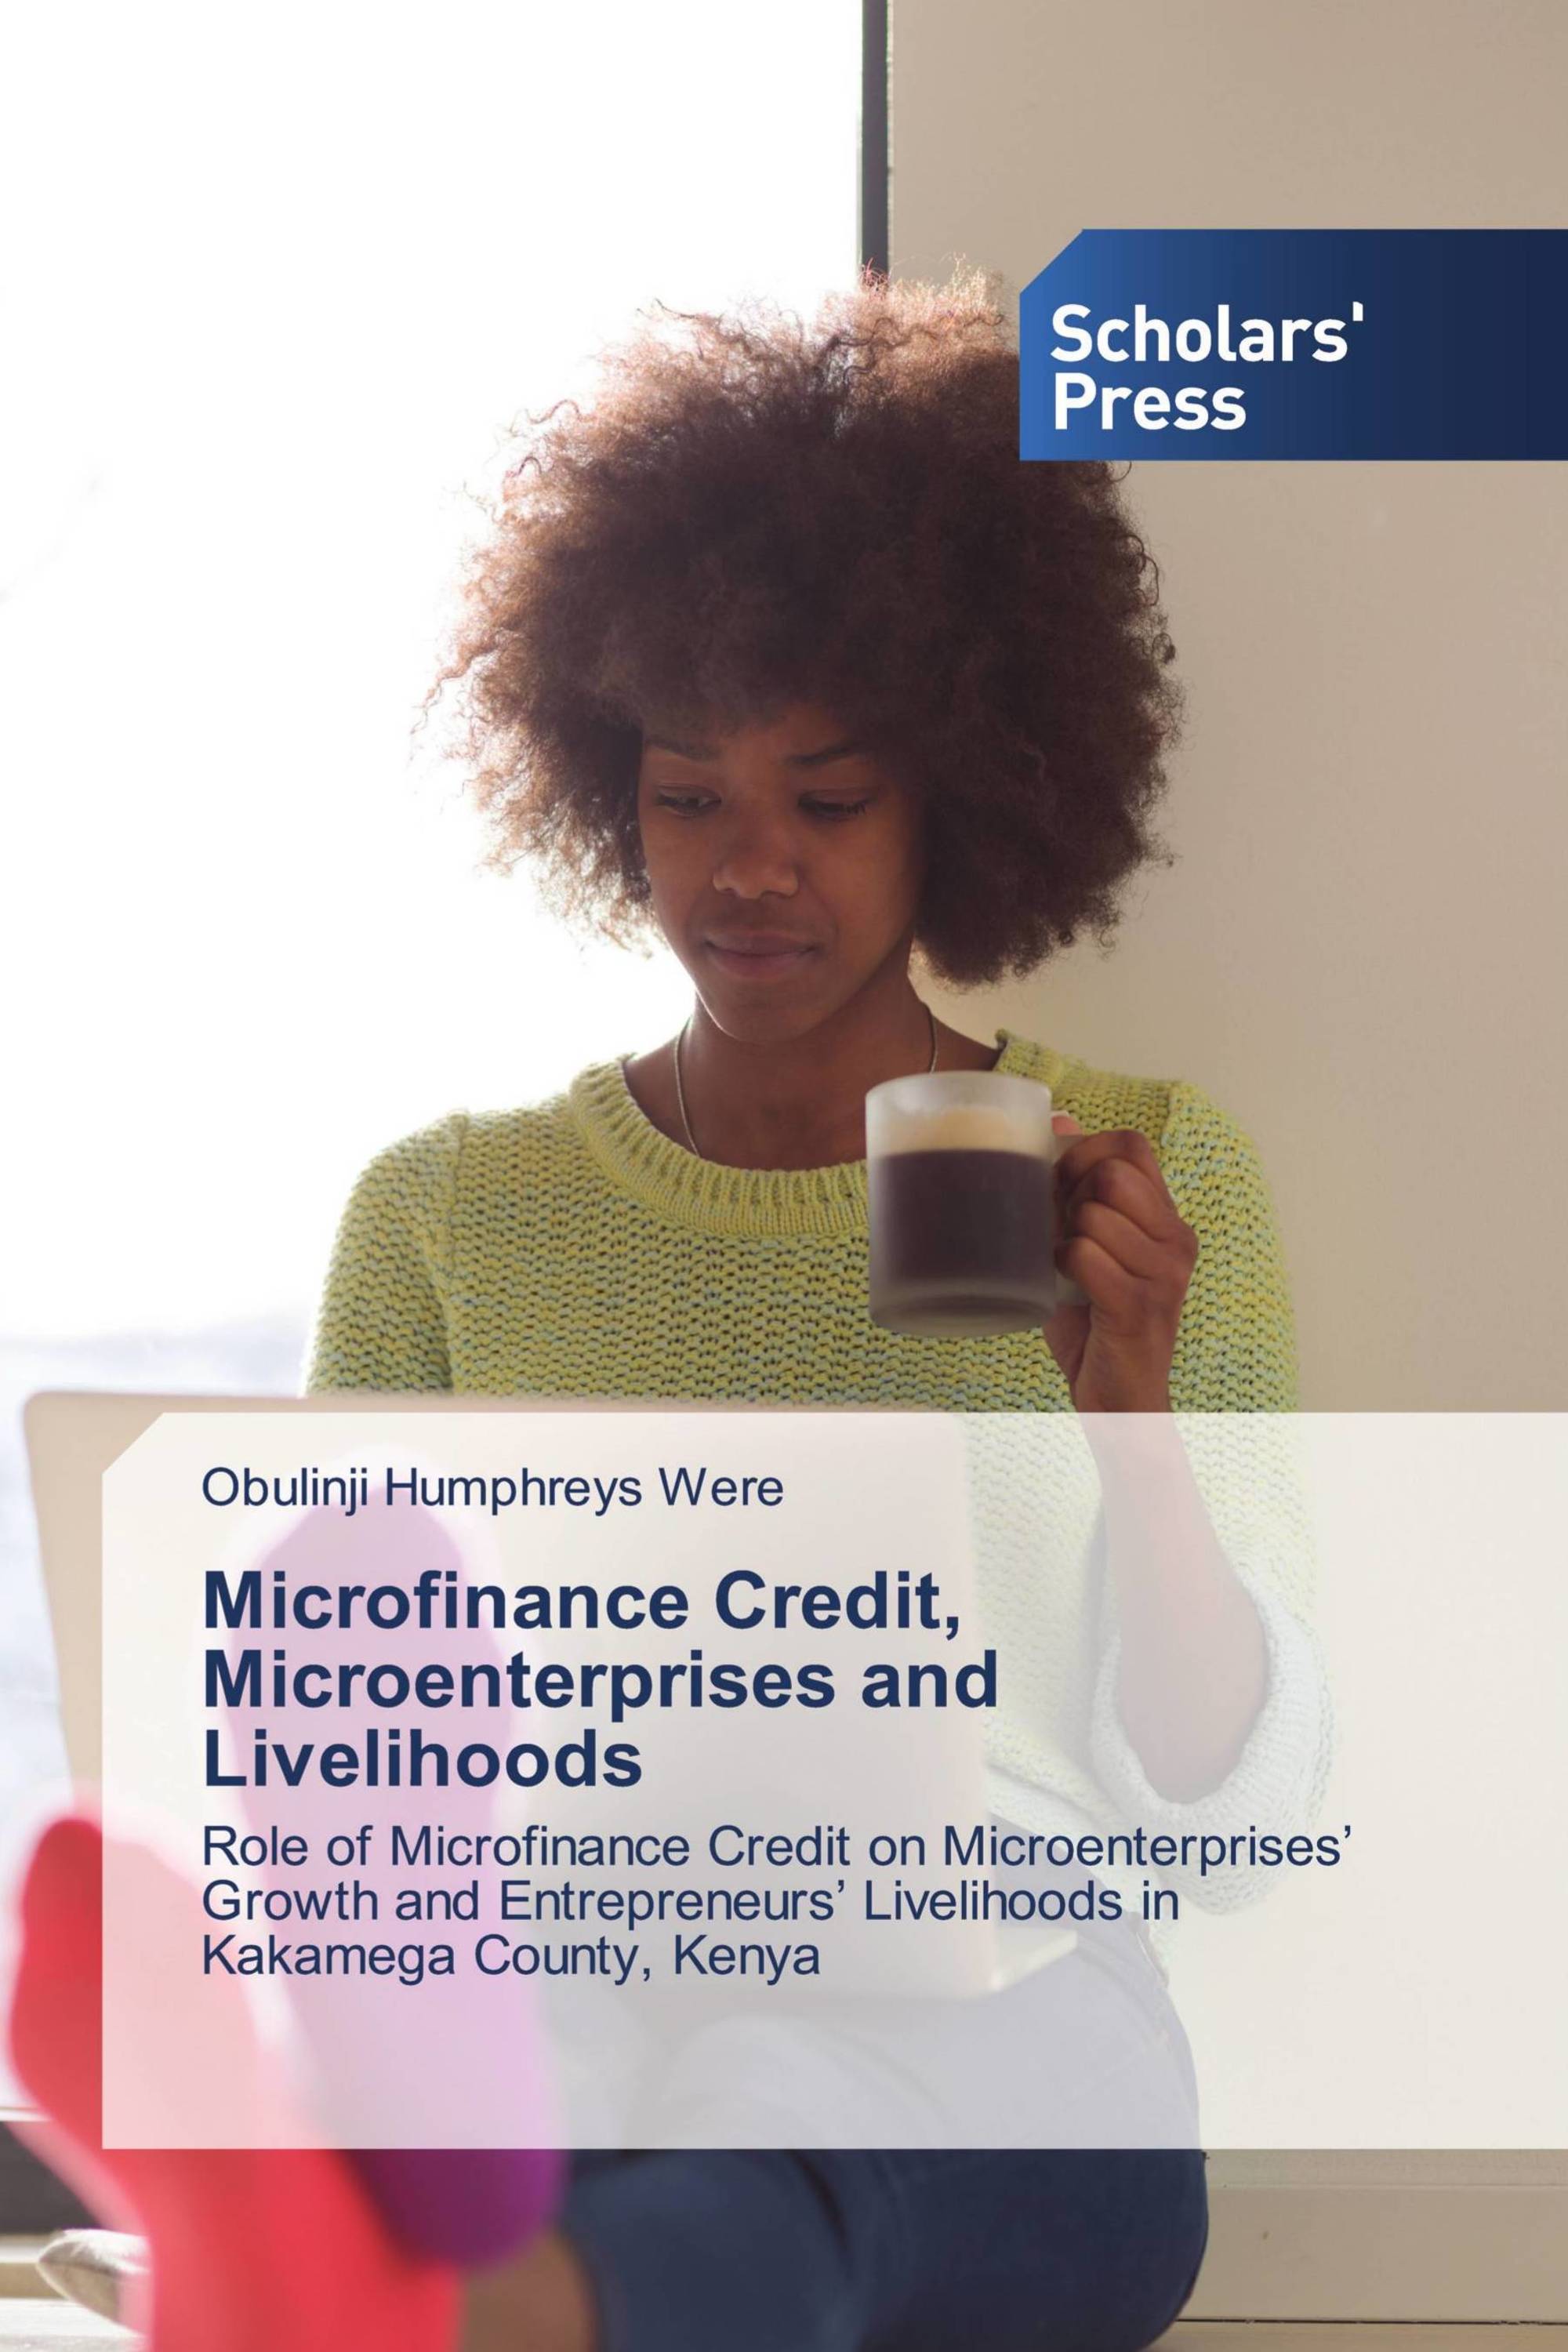 Microfinance Credit, Microenterprises and Livelihoods